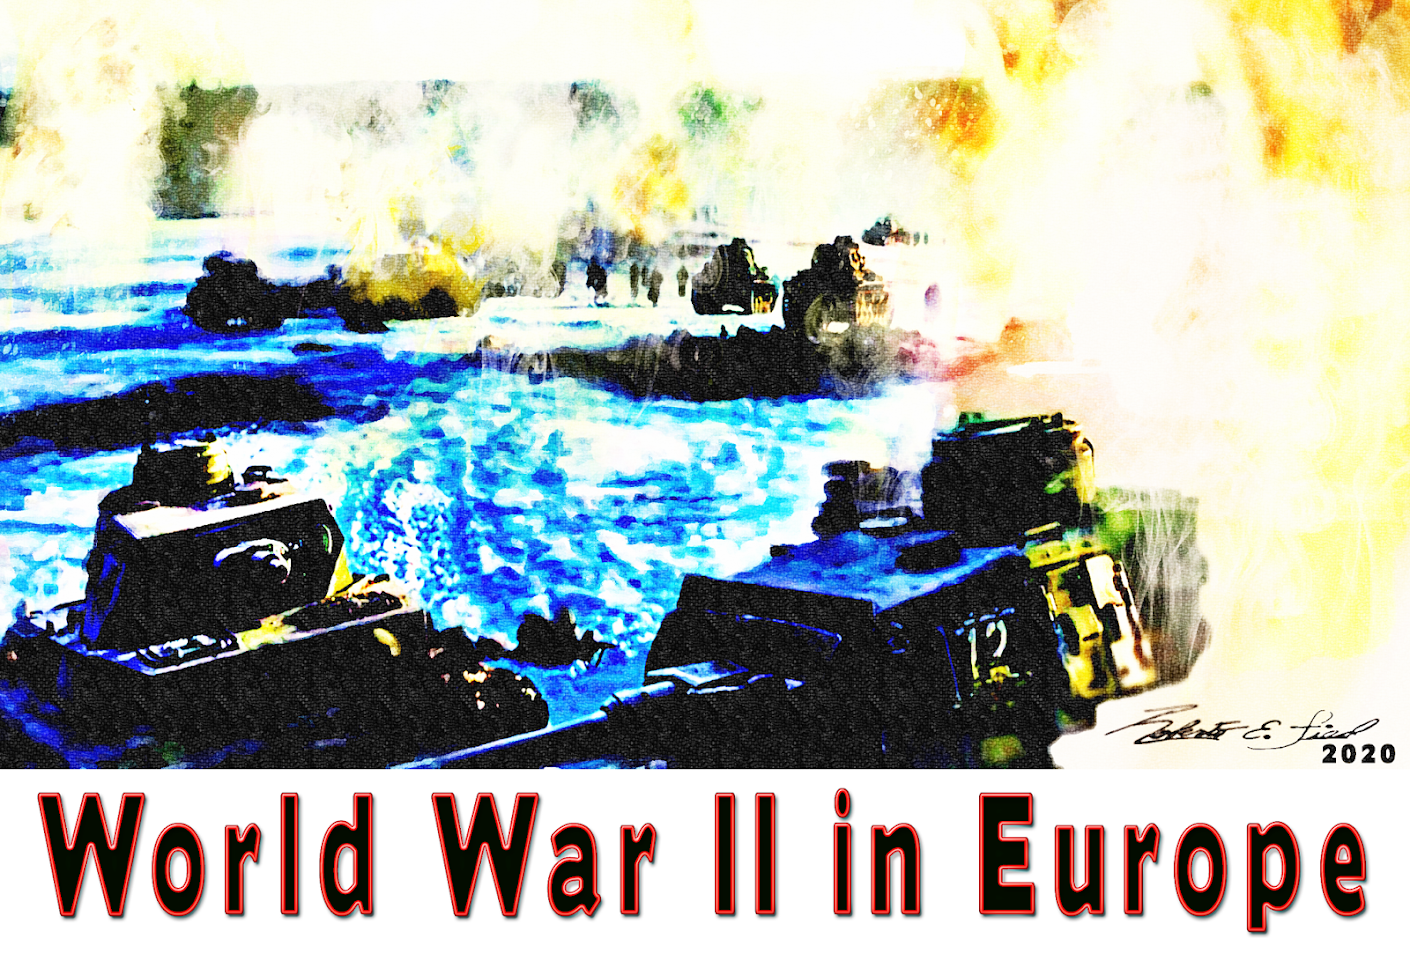 The Second World War - Europe